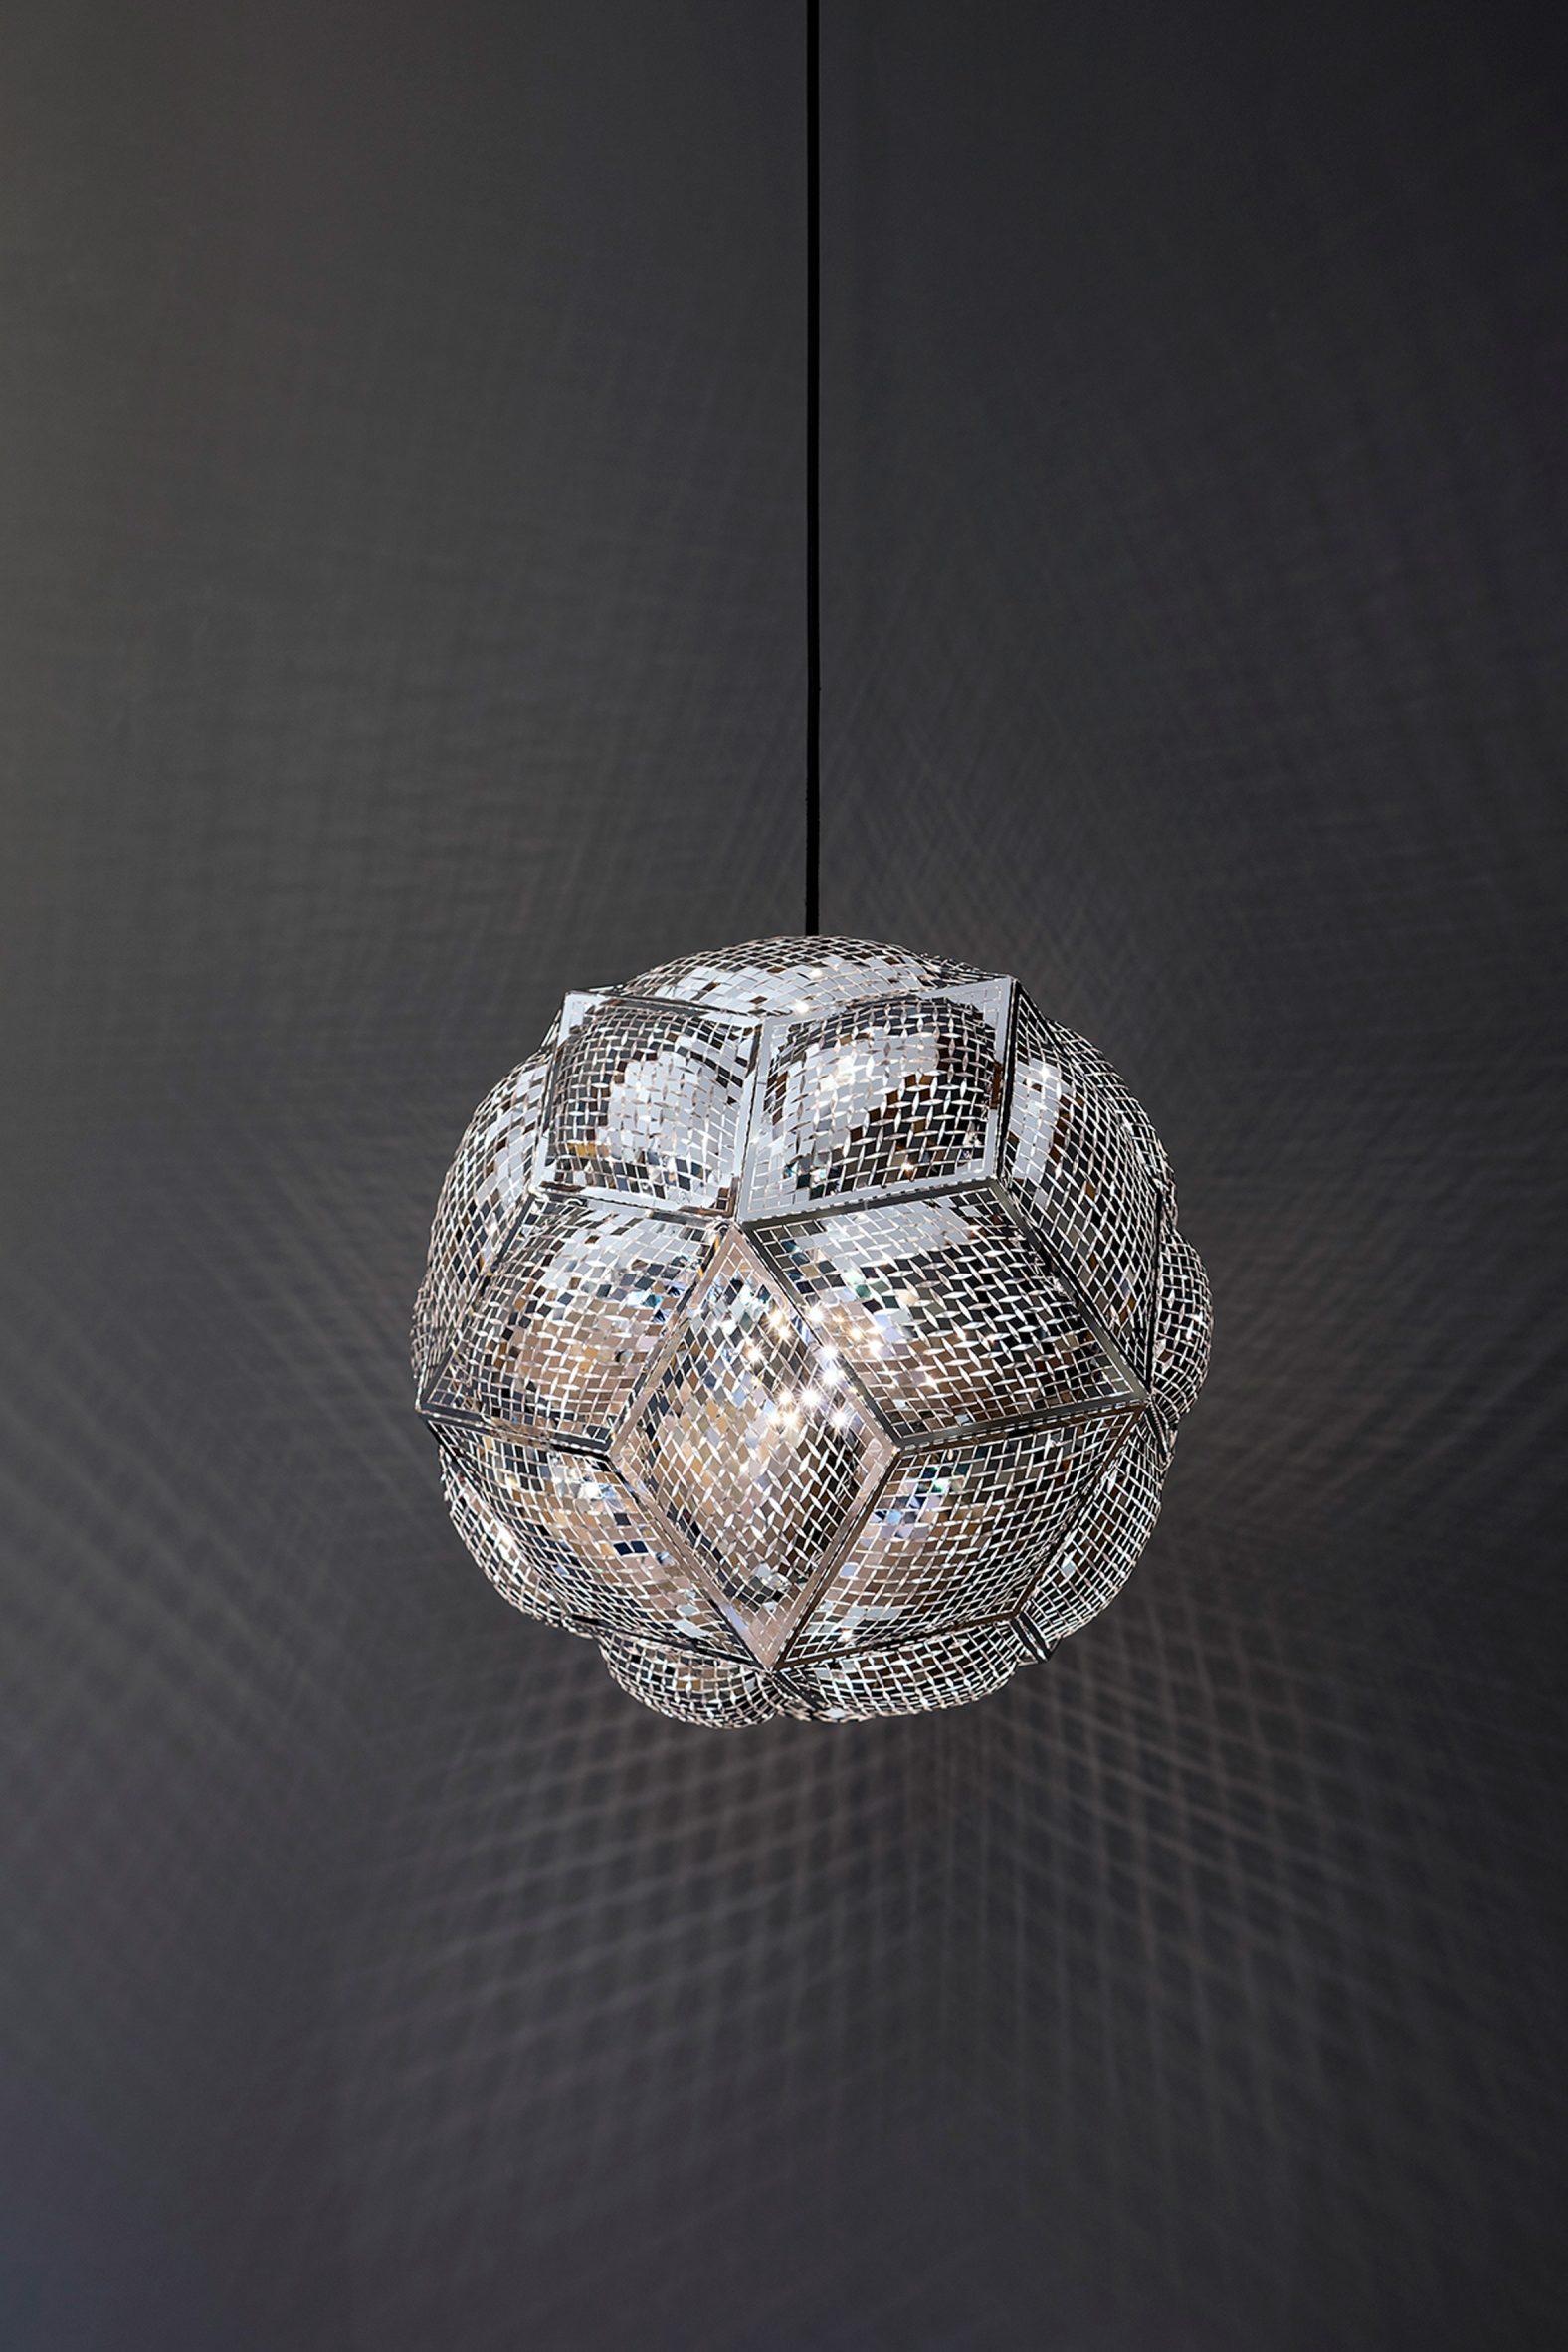 A metal lamp by Tom Dixon